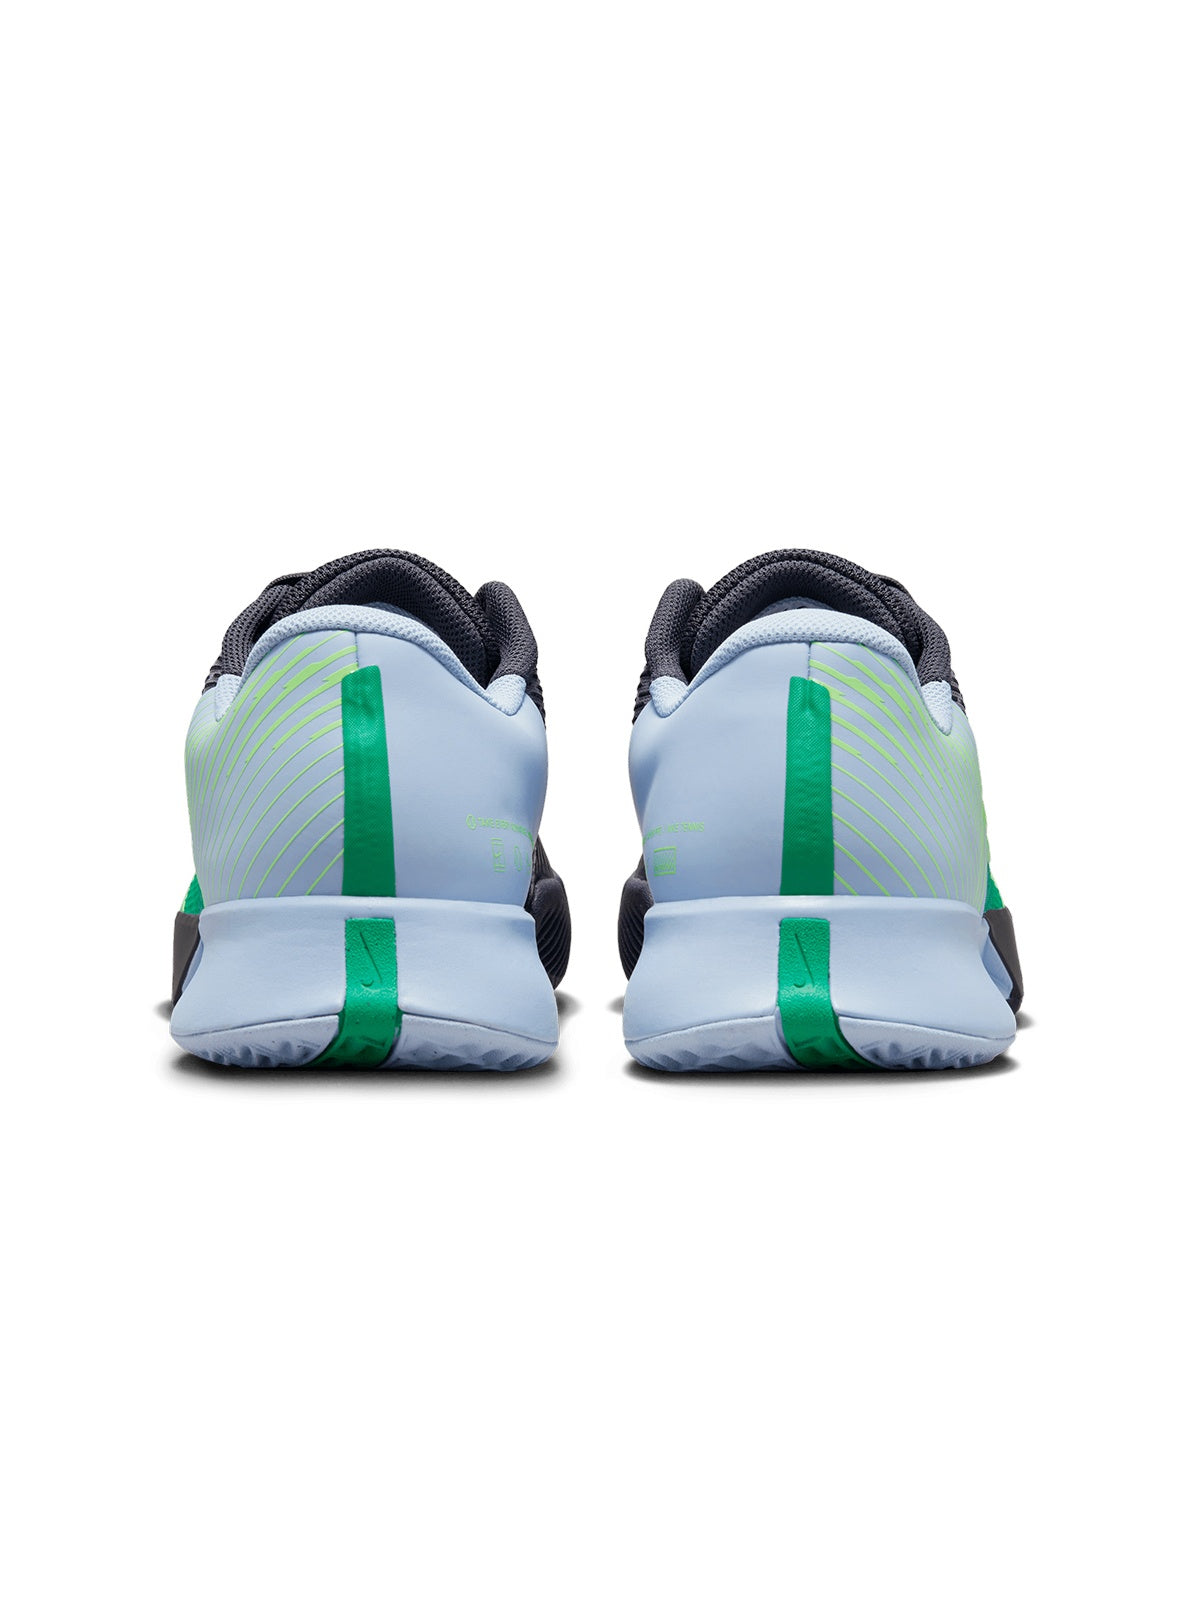 Scarpe da tennis Uomo Nike - Air Zoom Vapor Pro 2 Cly - Grigio